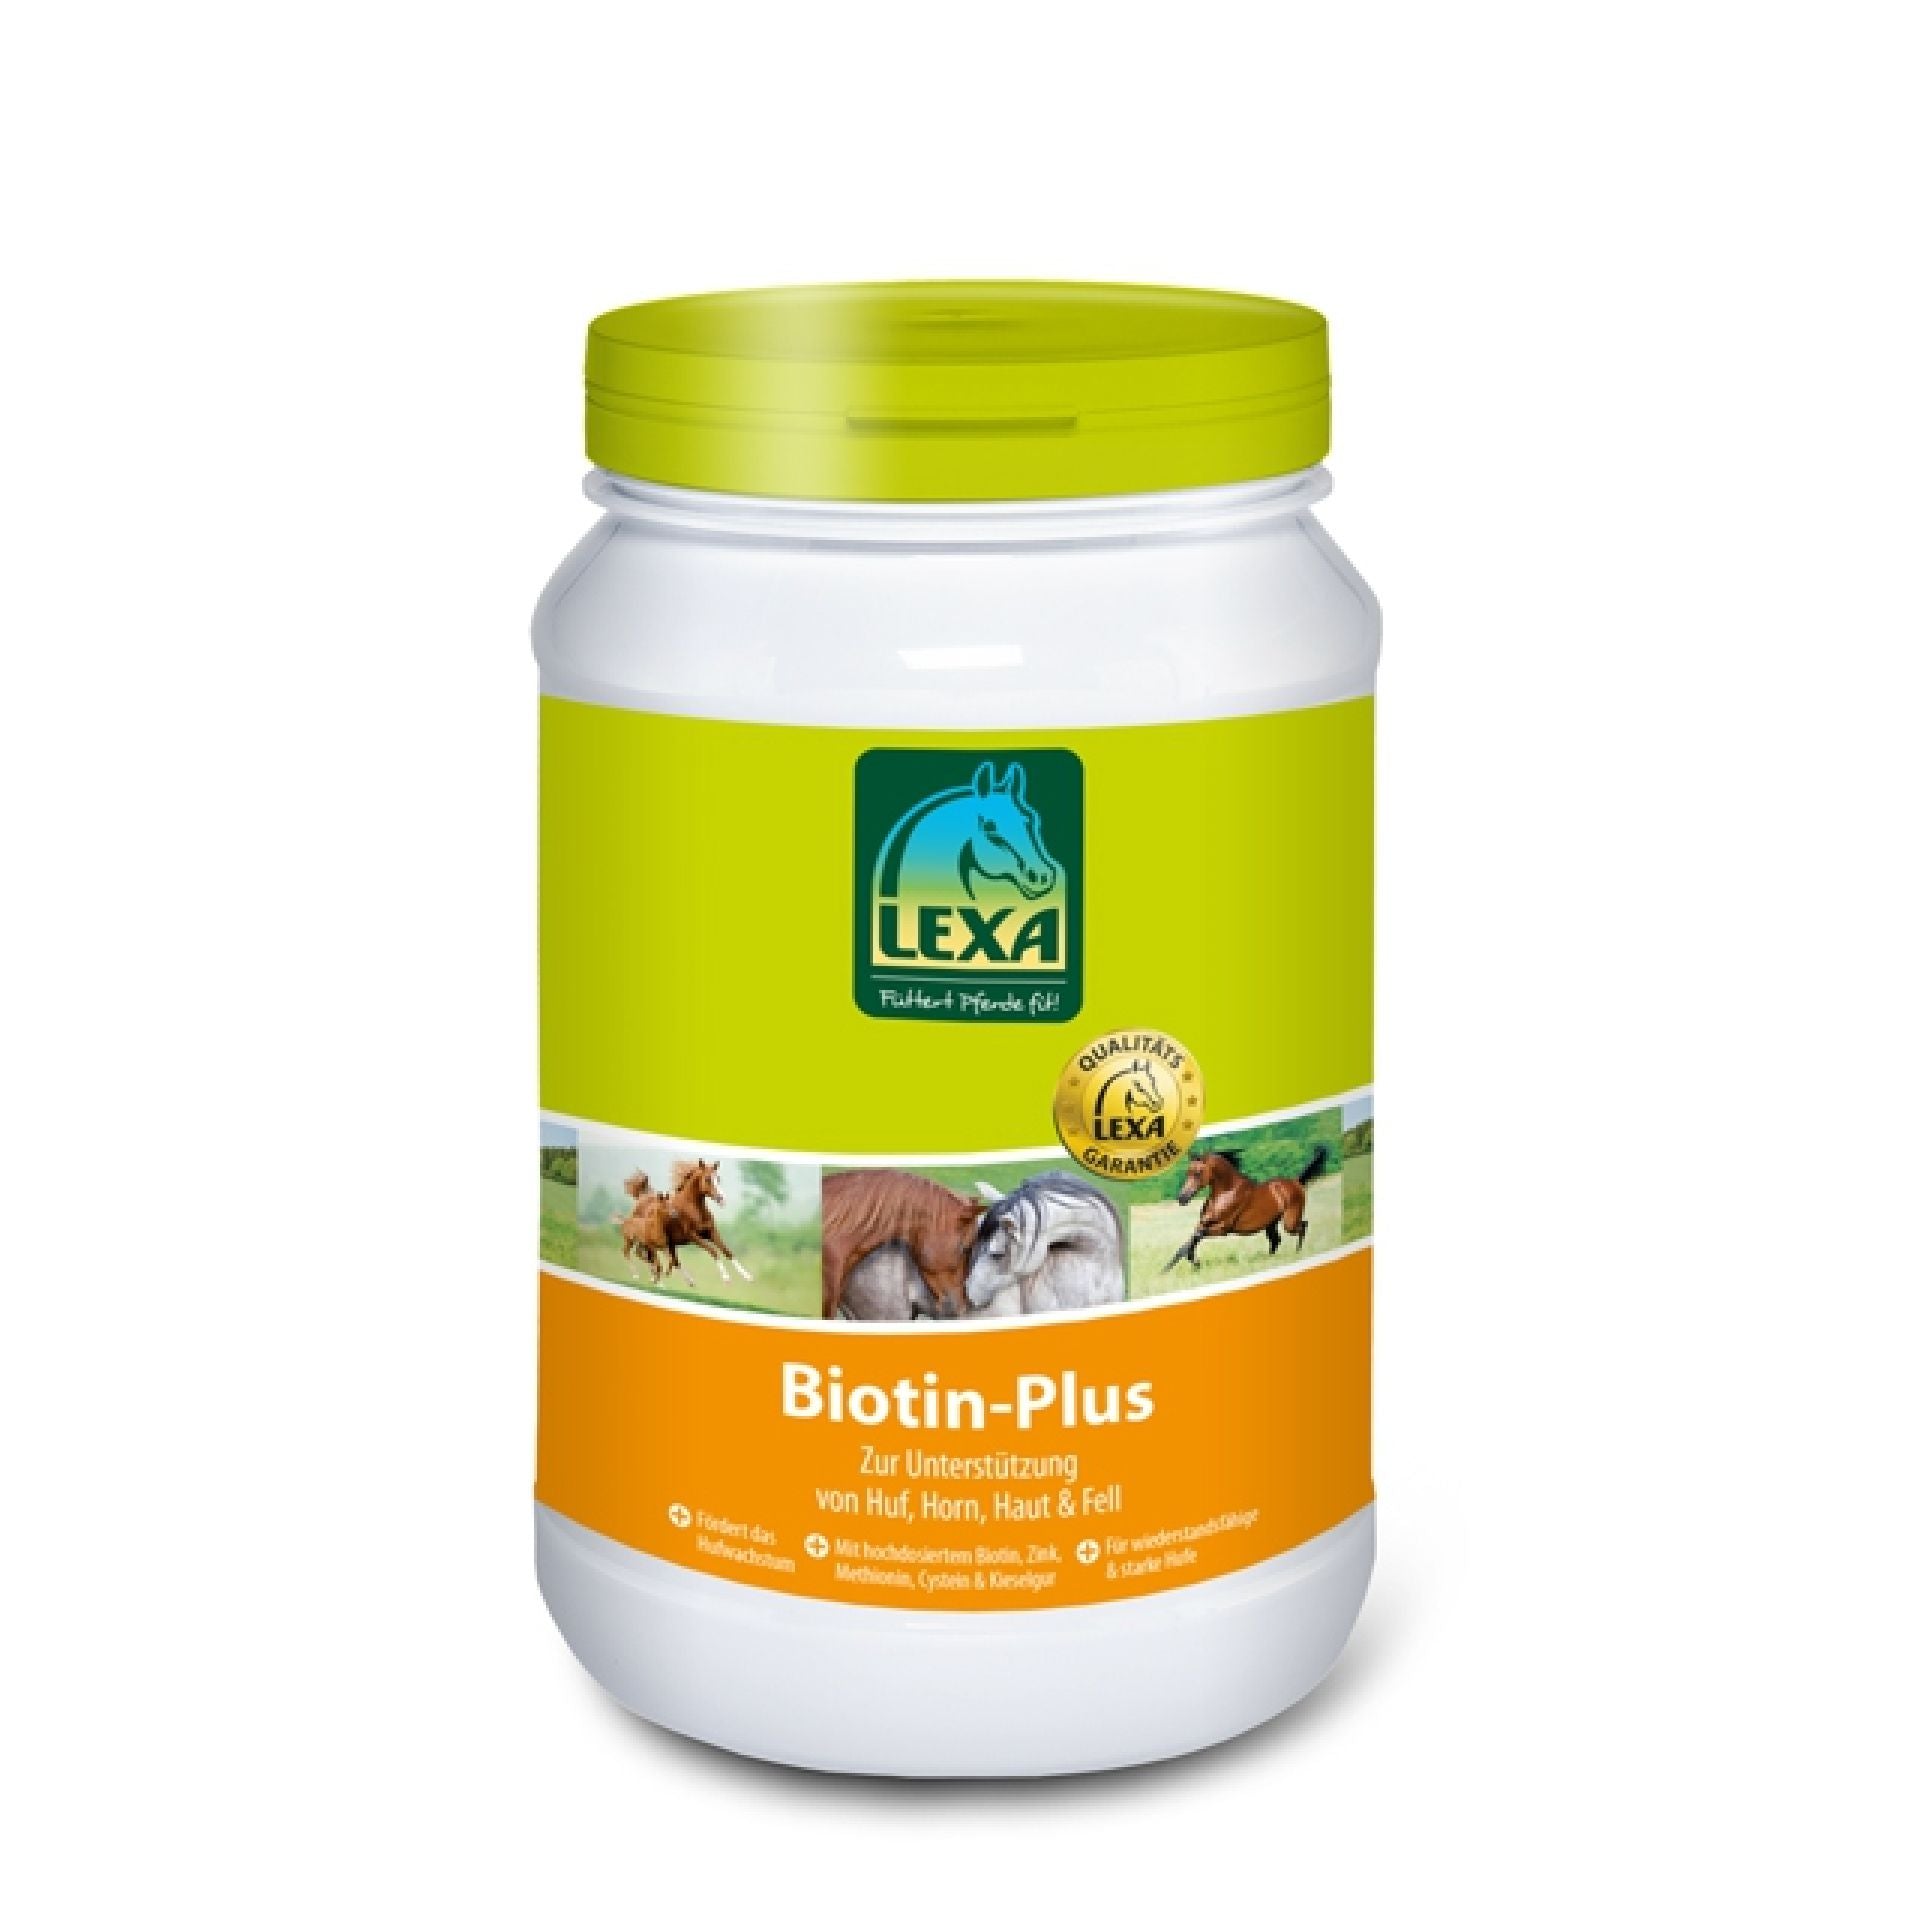 Biotin-Plus 1 kg